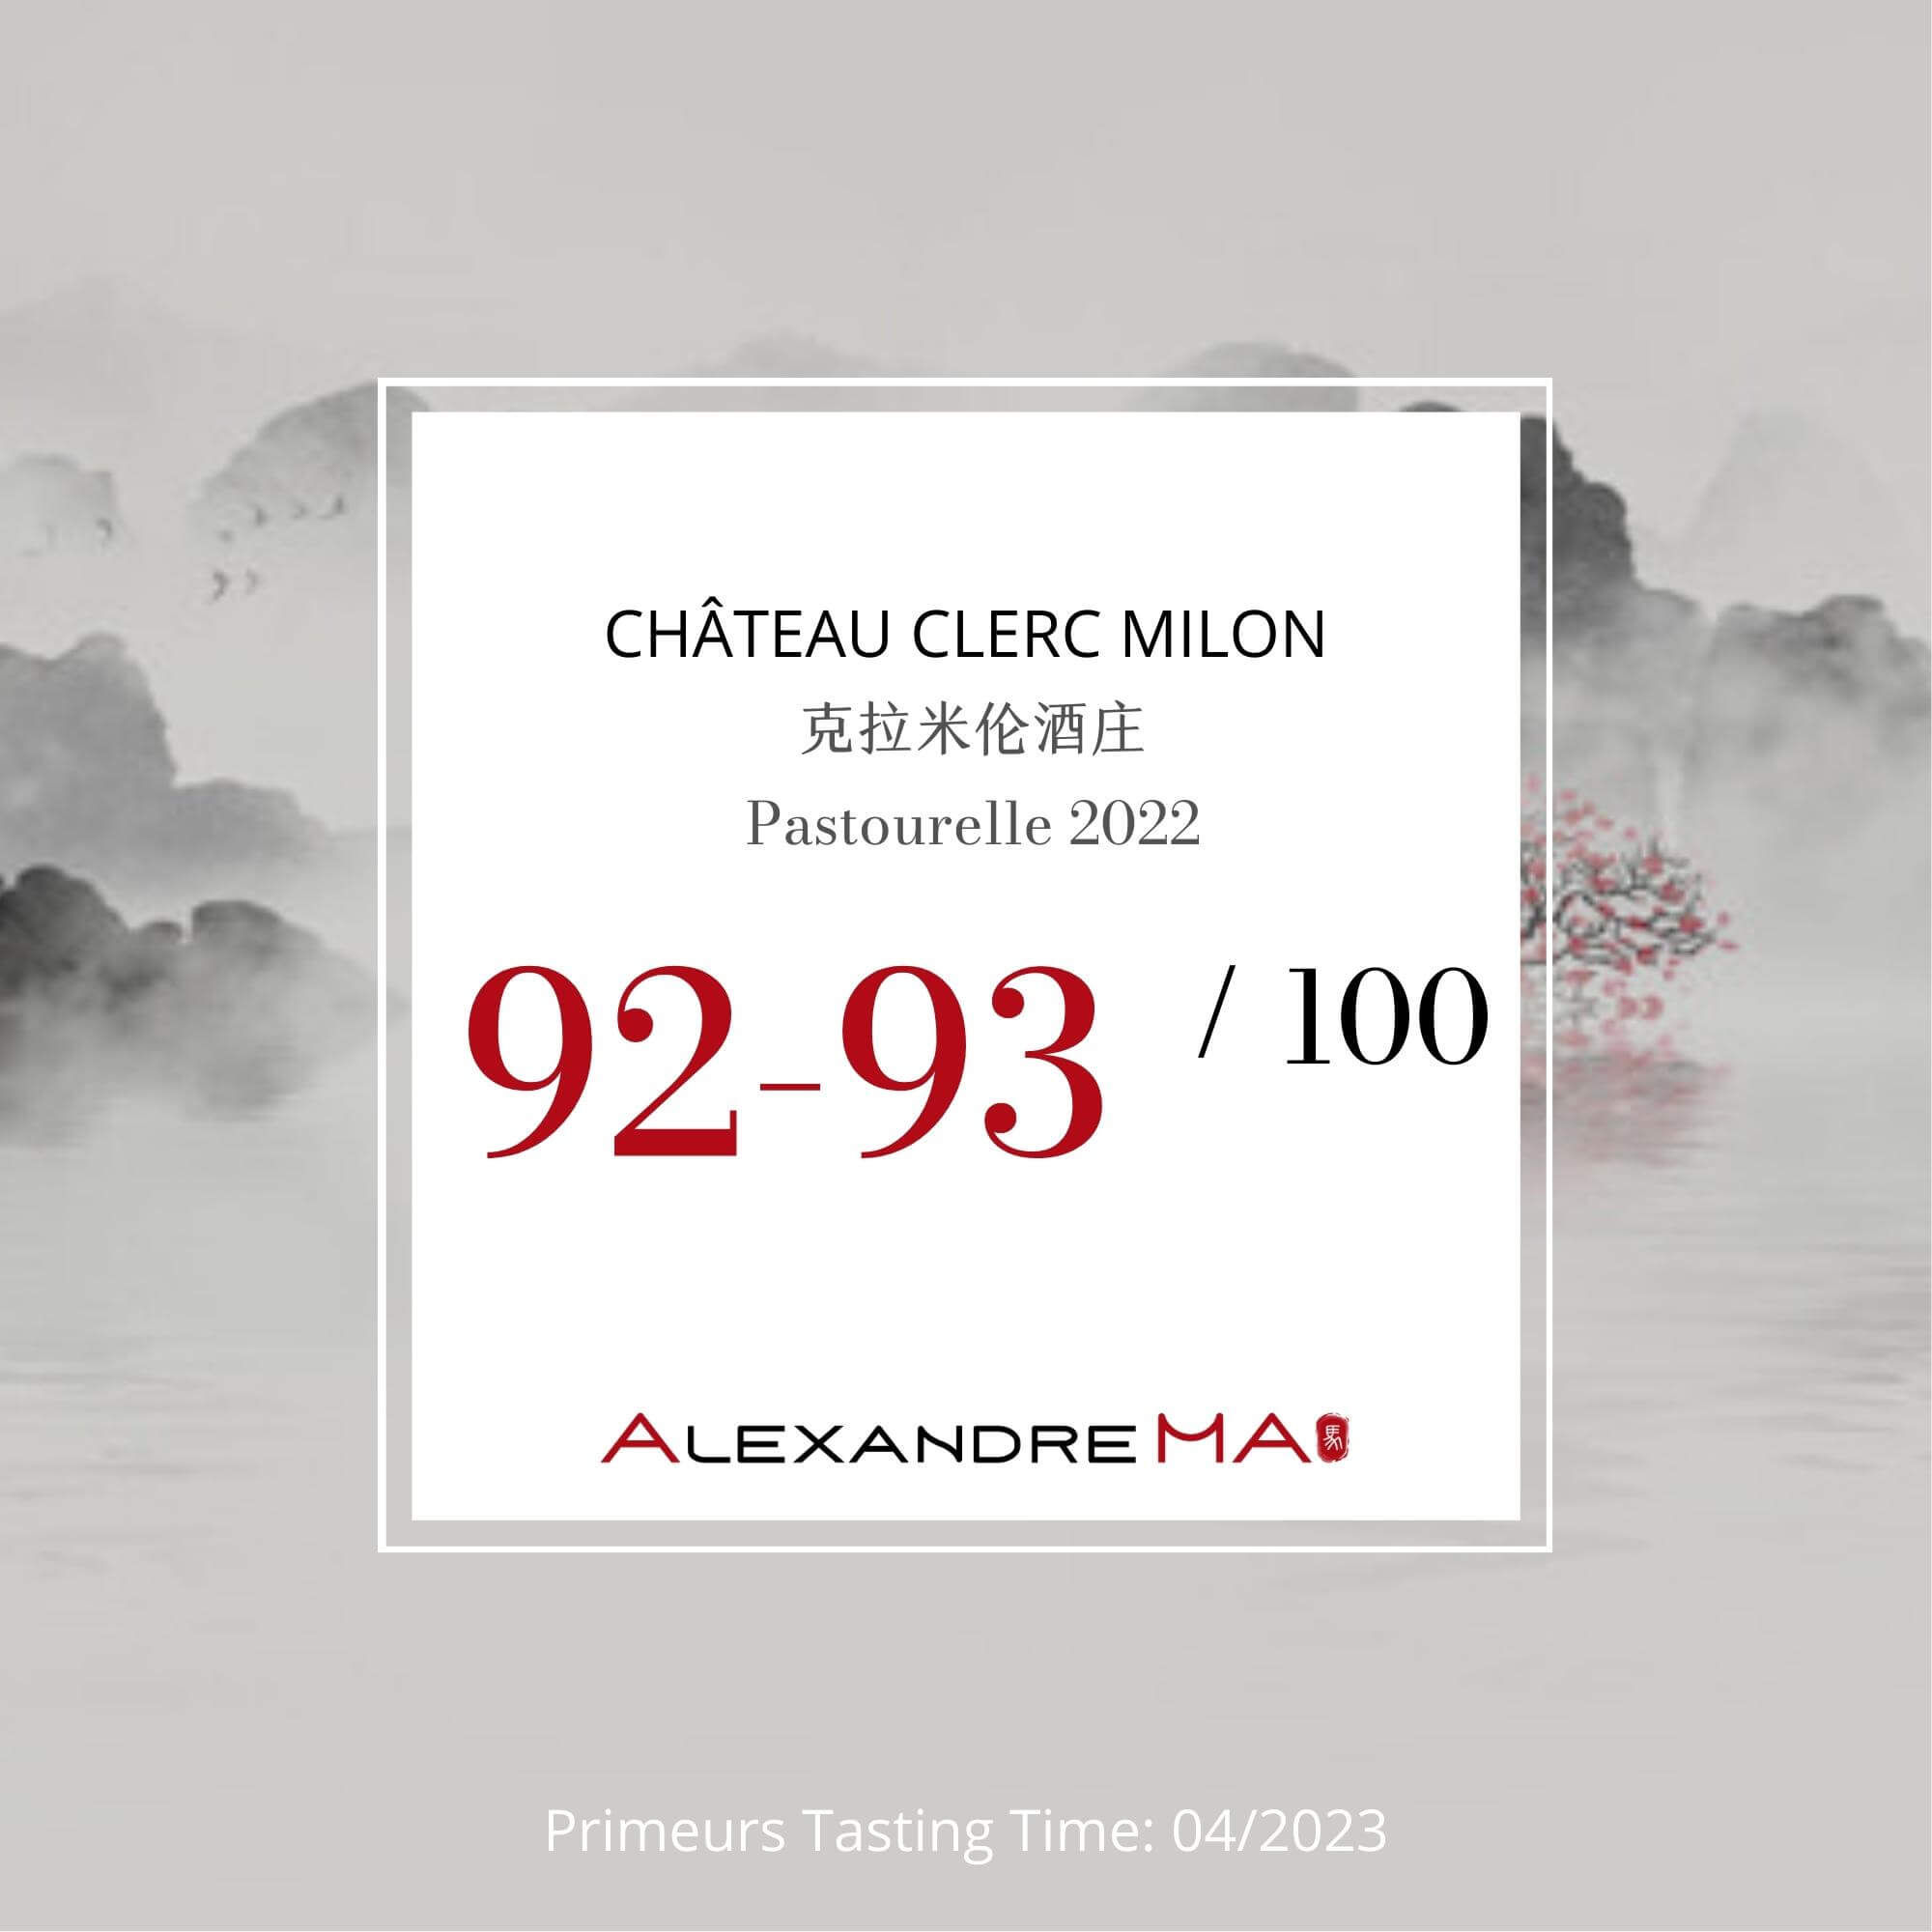 Château Clerc Milon 克拉米伦酒庄-Pastourelle 2022 Primeurs - Alexandre Ma